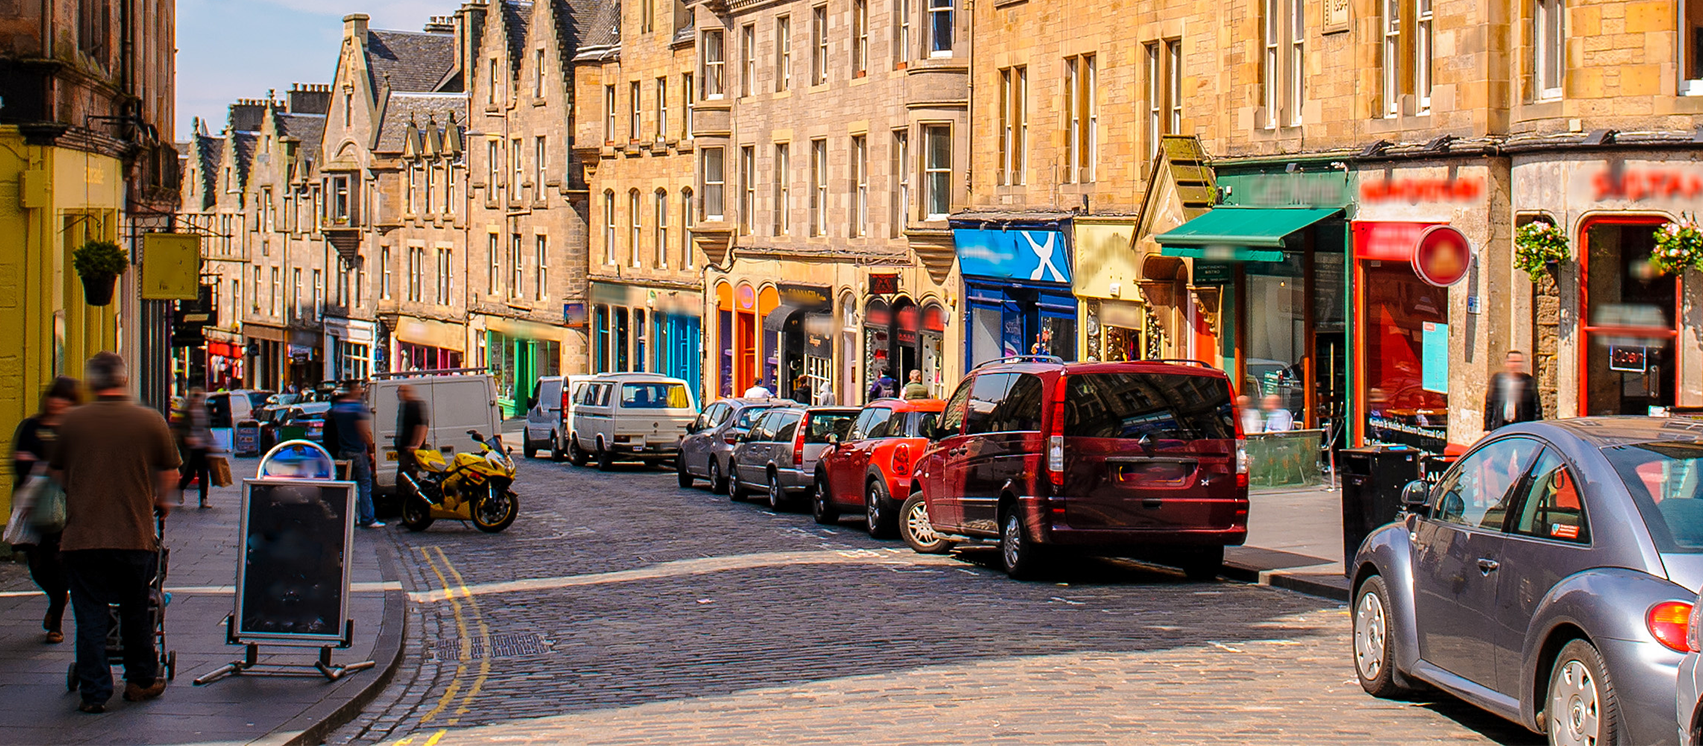 Street view of Edinburgh, Scotland, UK